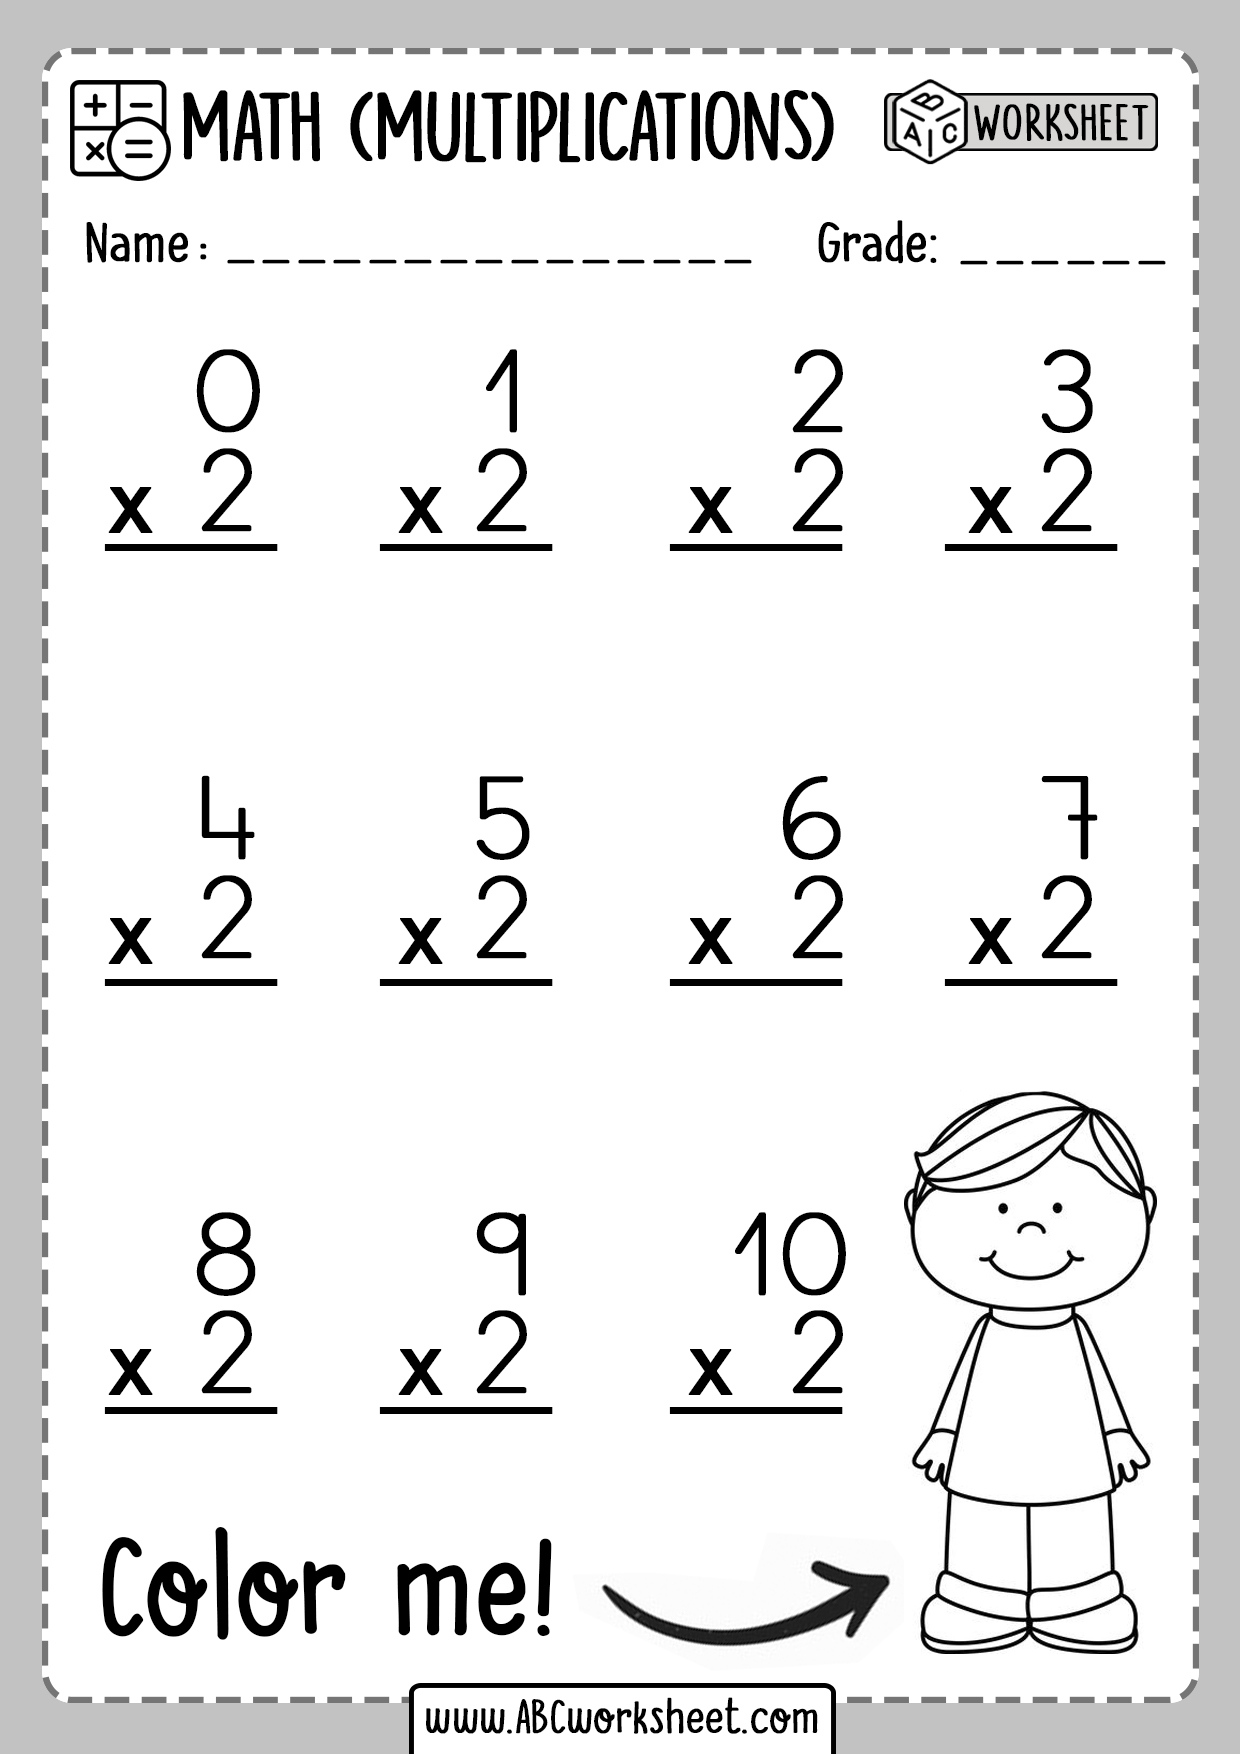 multiplication-2s-worksheet-multiplication-worksheets